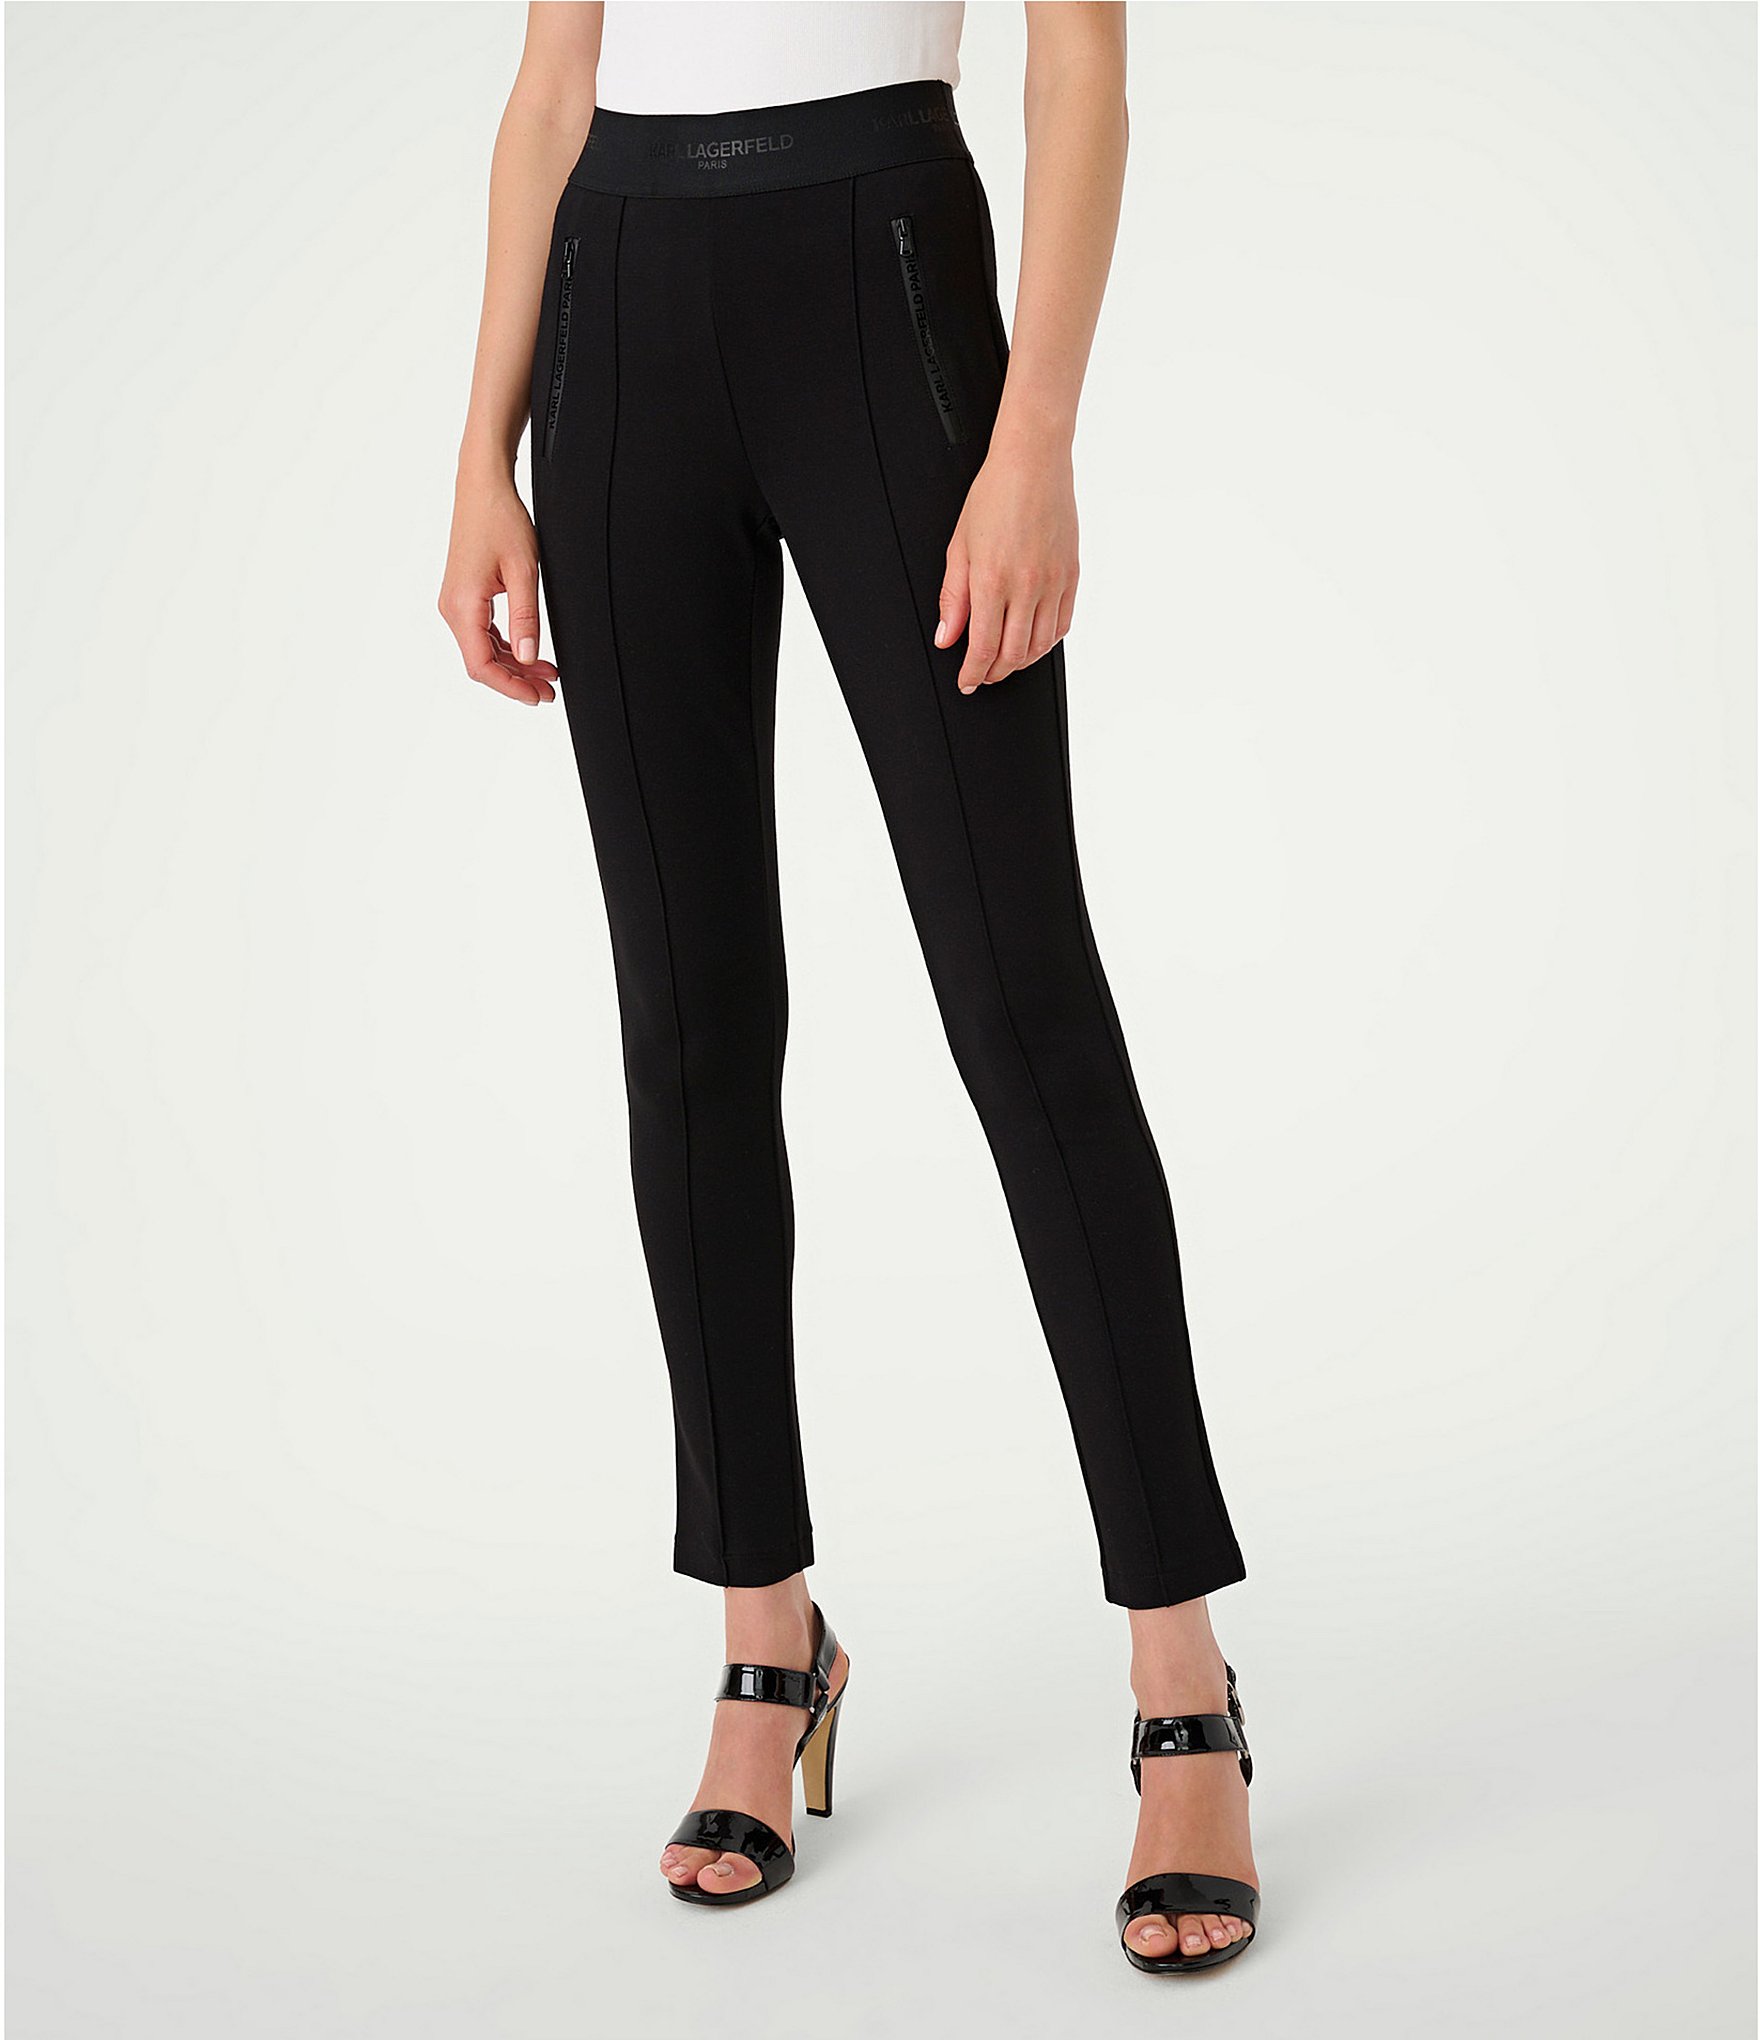 Karl Lagerfeld Black Denim Pull On Jeggings Ankle Stretch Jeans Pants ~ S  M3020